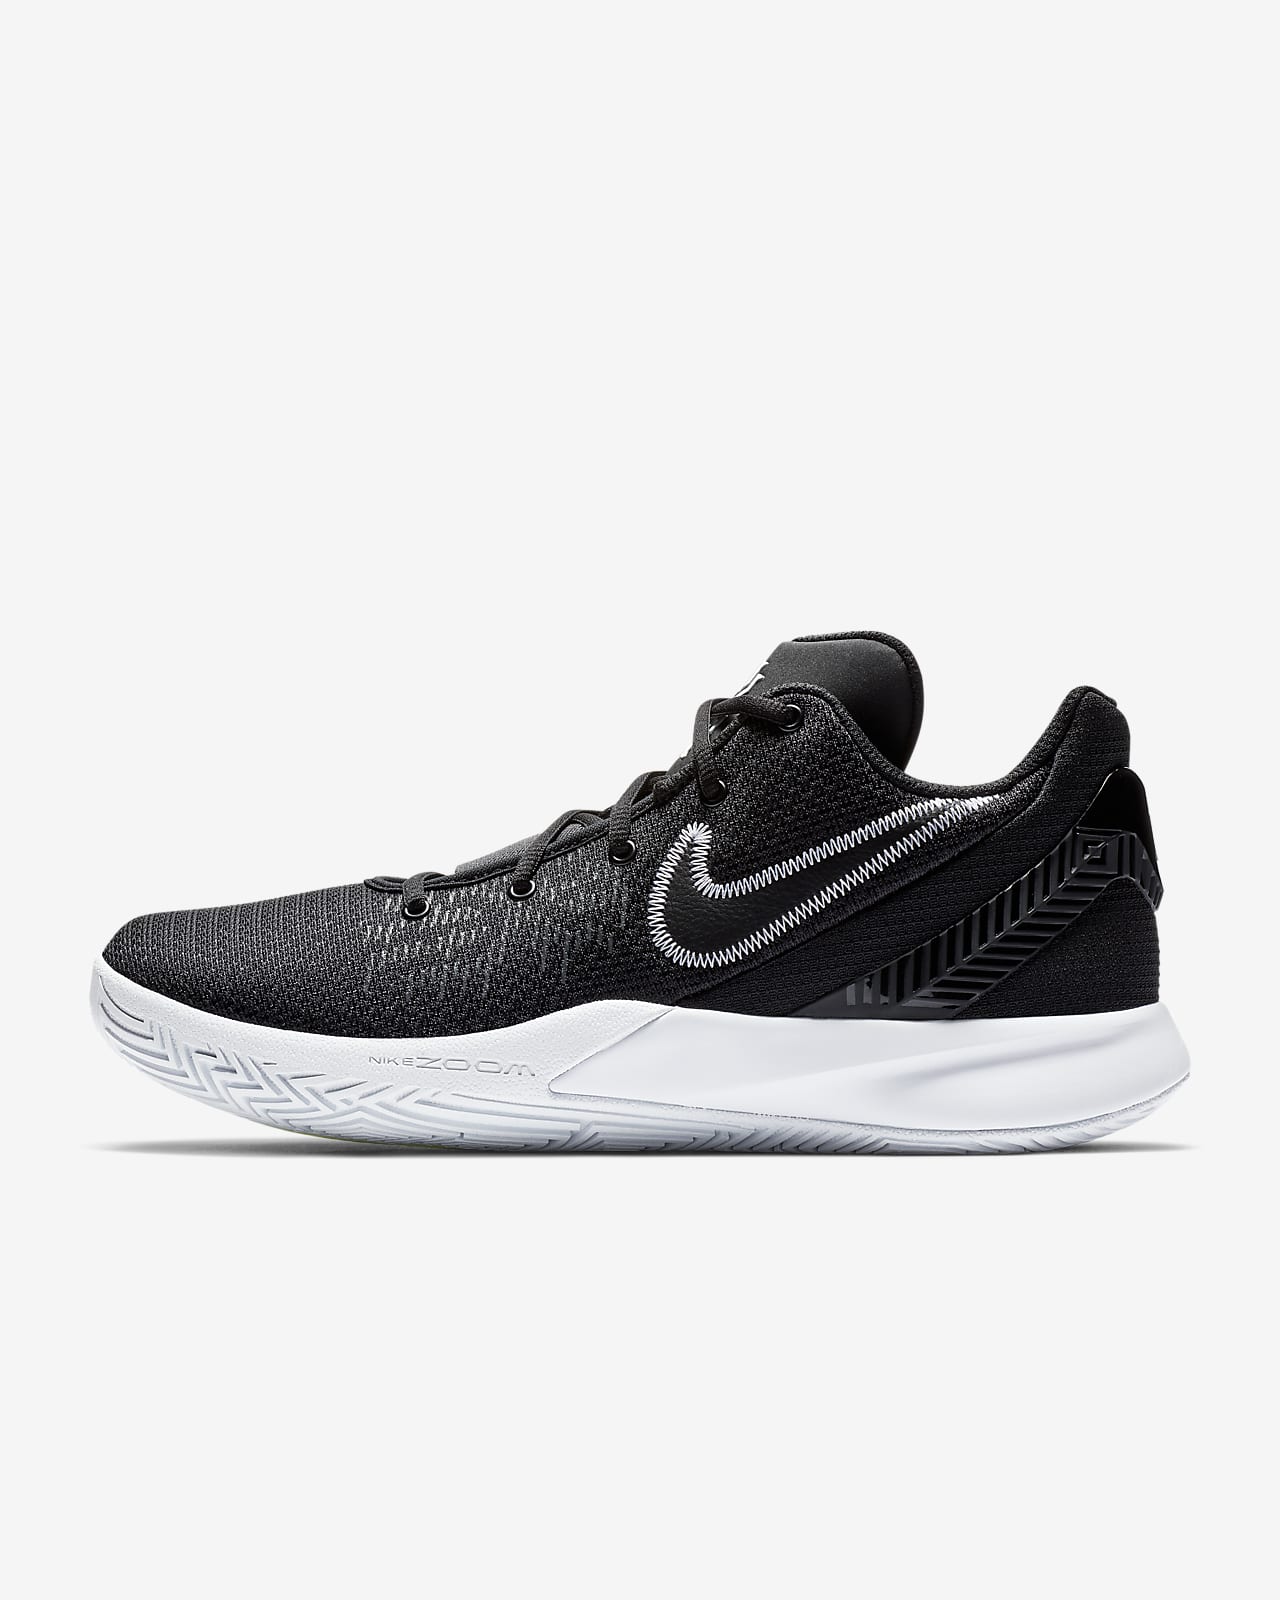 Kyrie Flytrap II Basketball Shoe. Nike.com